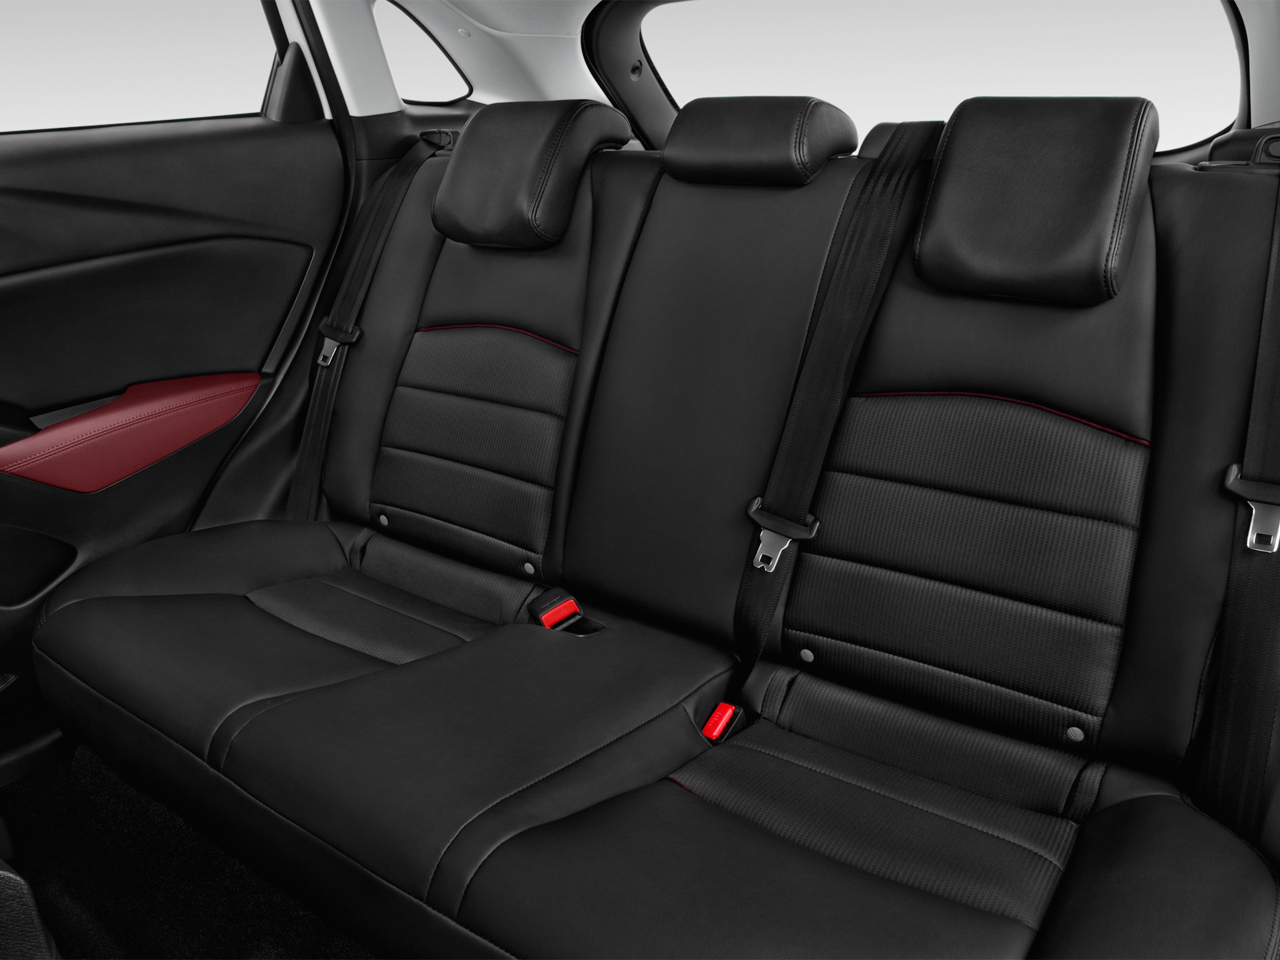 Mazda Mazda3 s Touring interior rear seat view